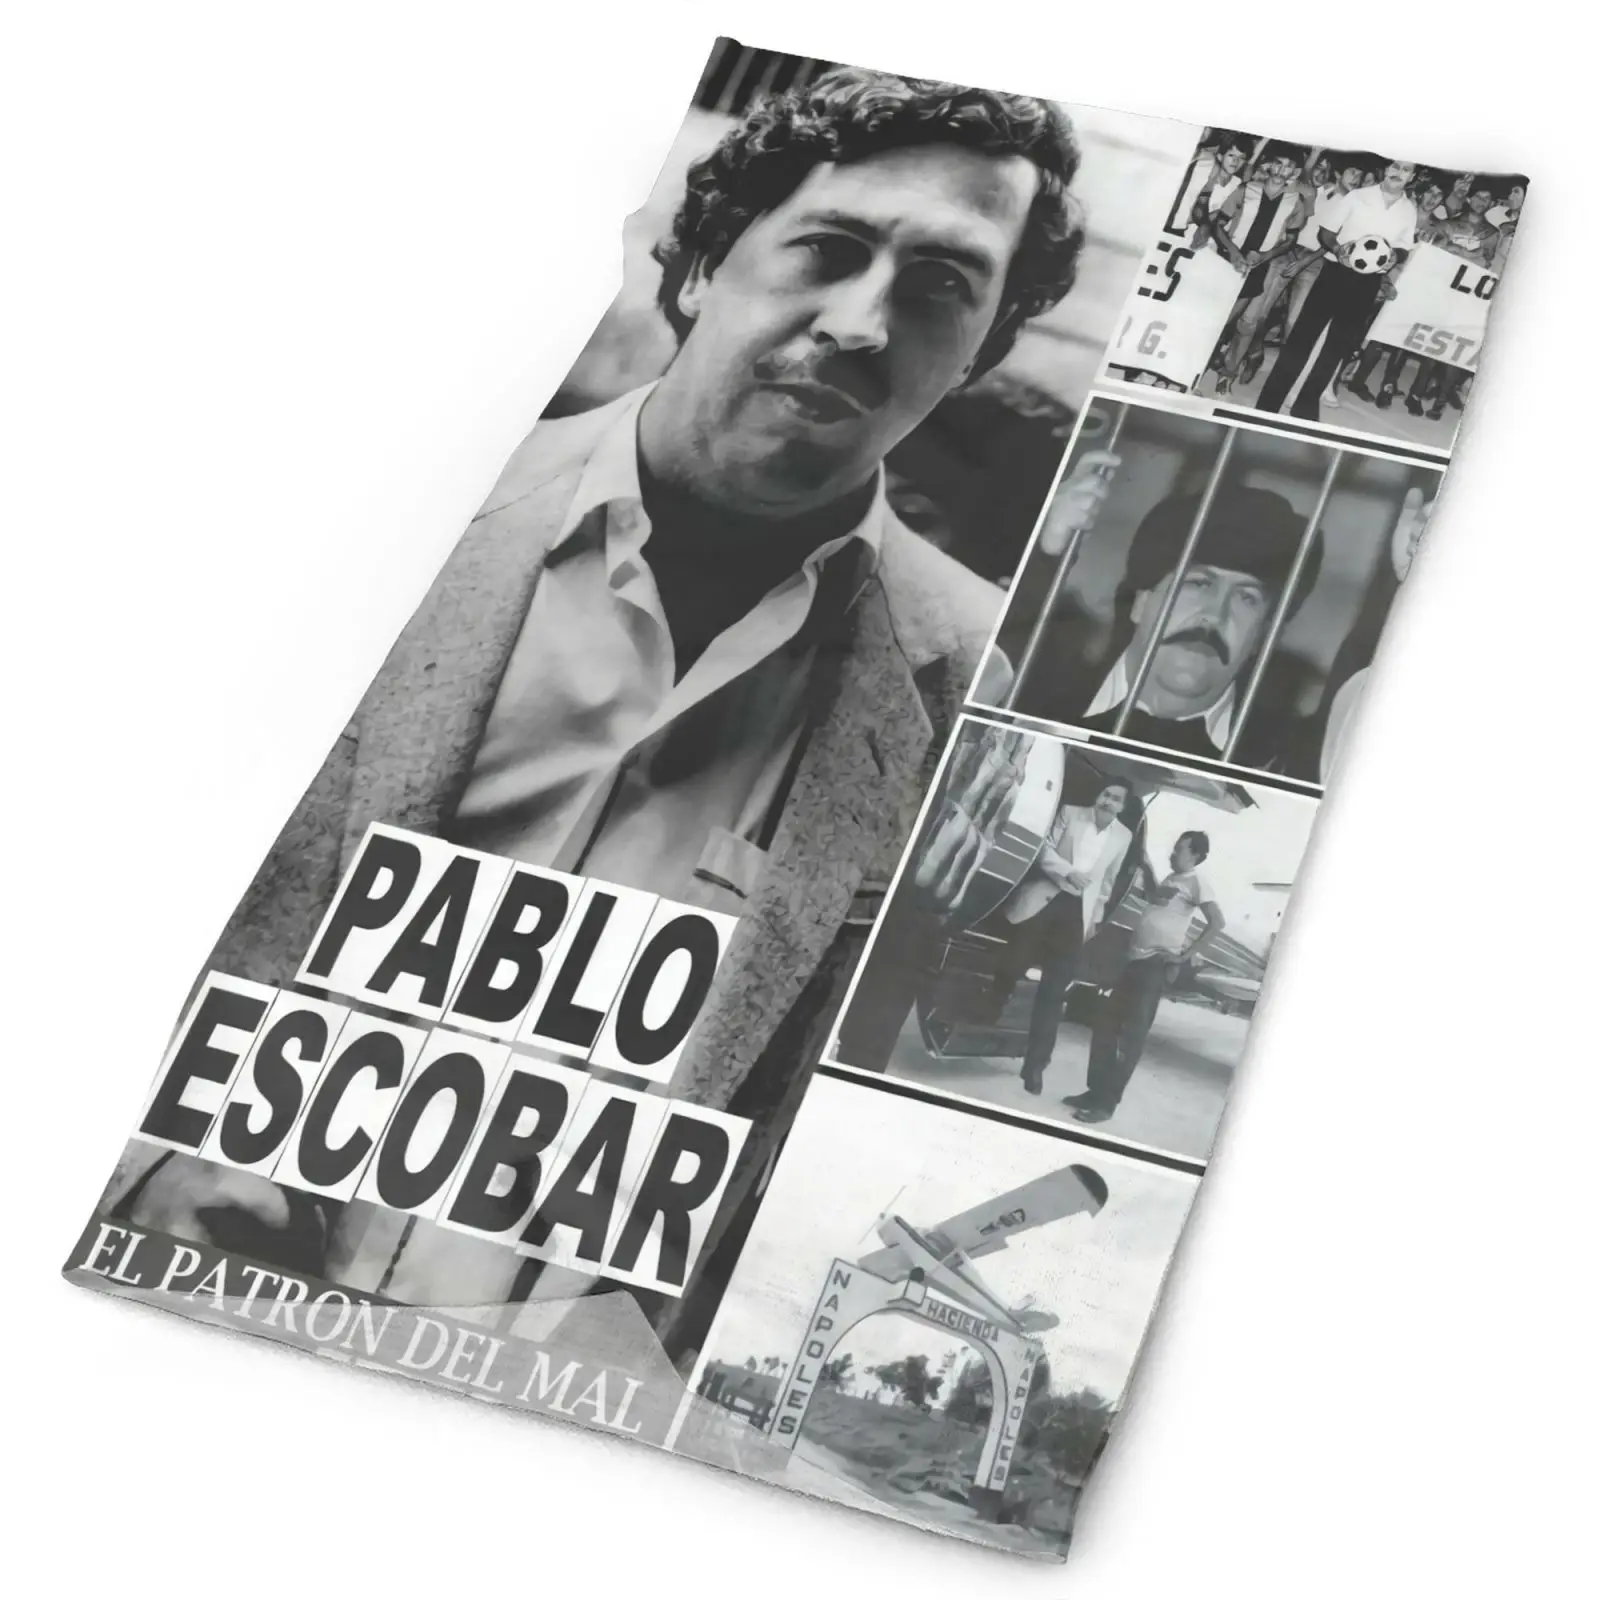 

Pablo Escobar Shir El Patron Del Men's Bandana Scarf For Men Fashion Hunting Mask Tactical Neck Warmer Bandana Men's Balaclava